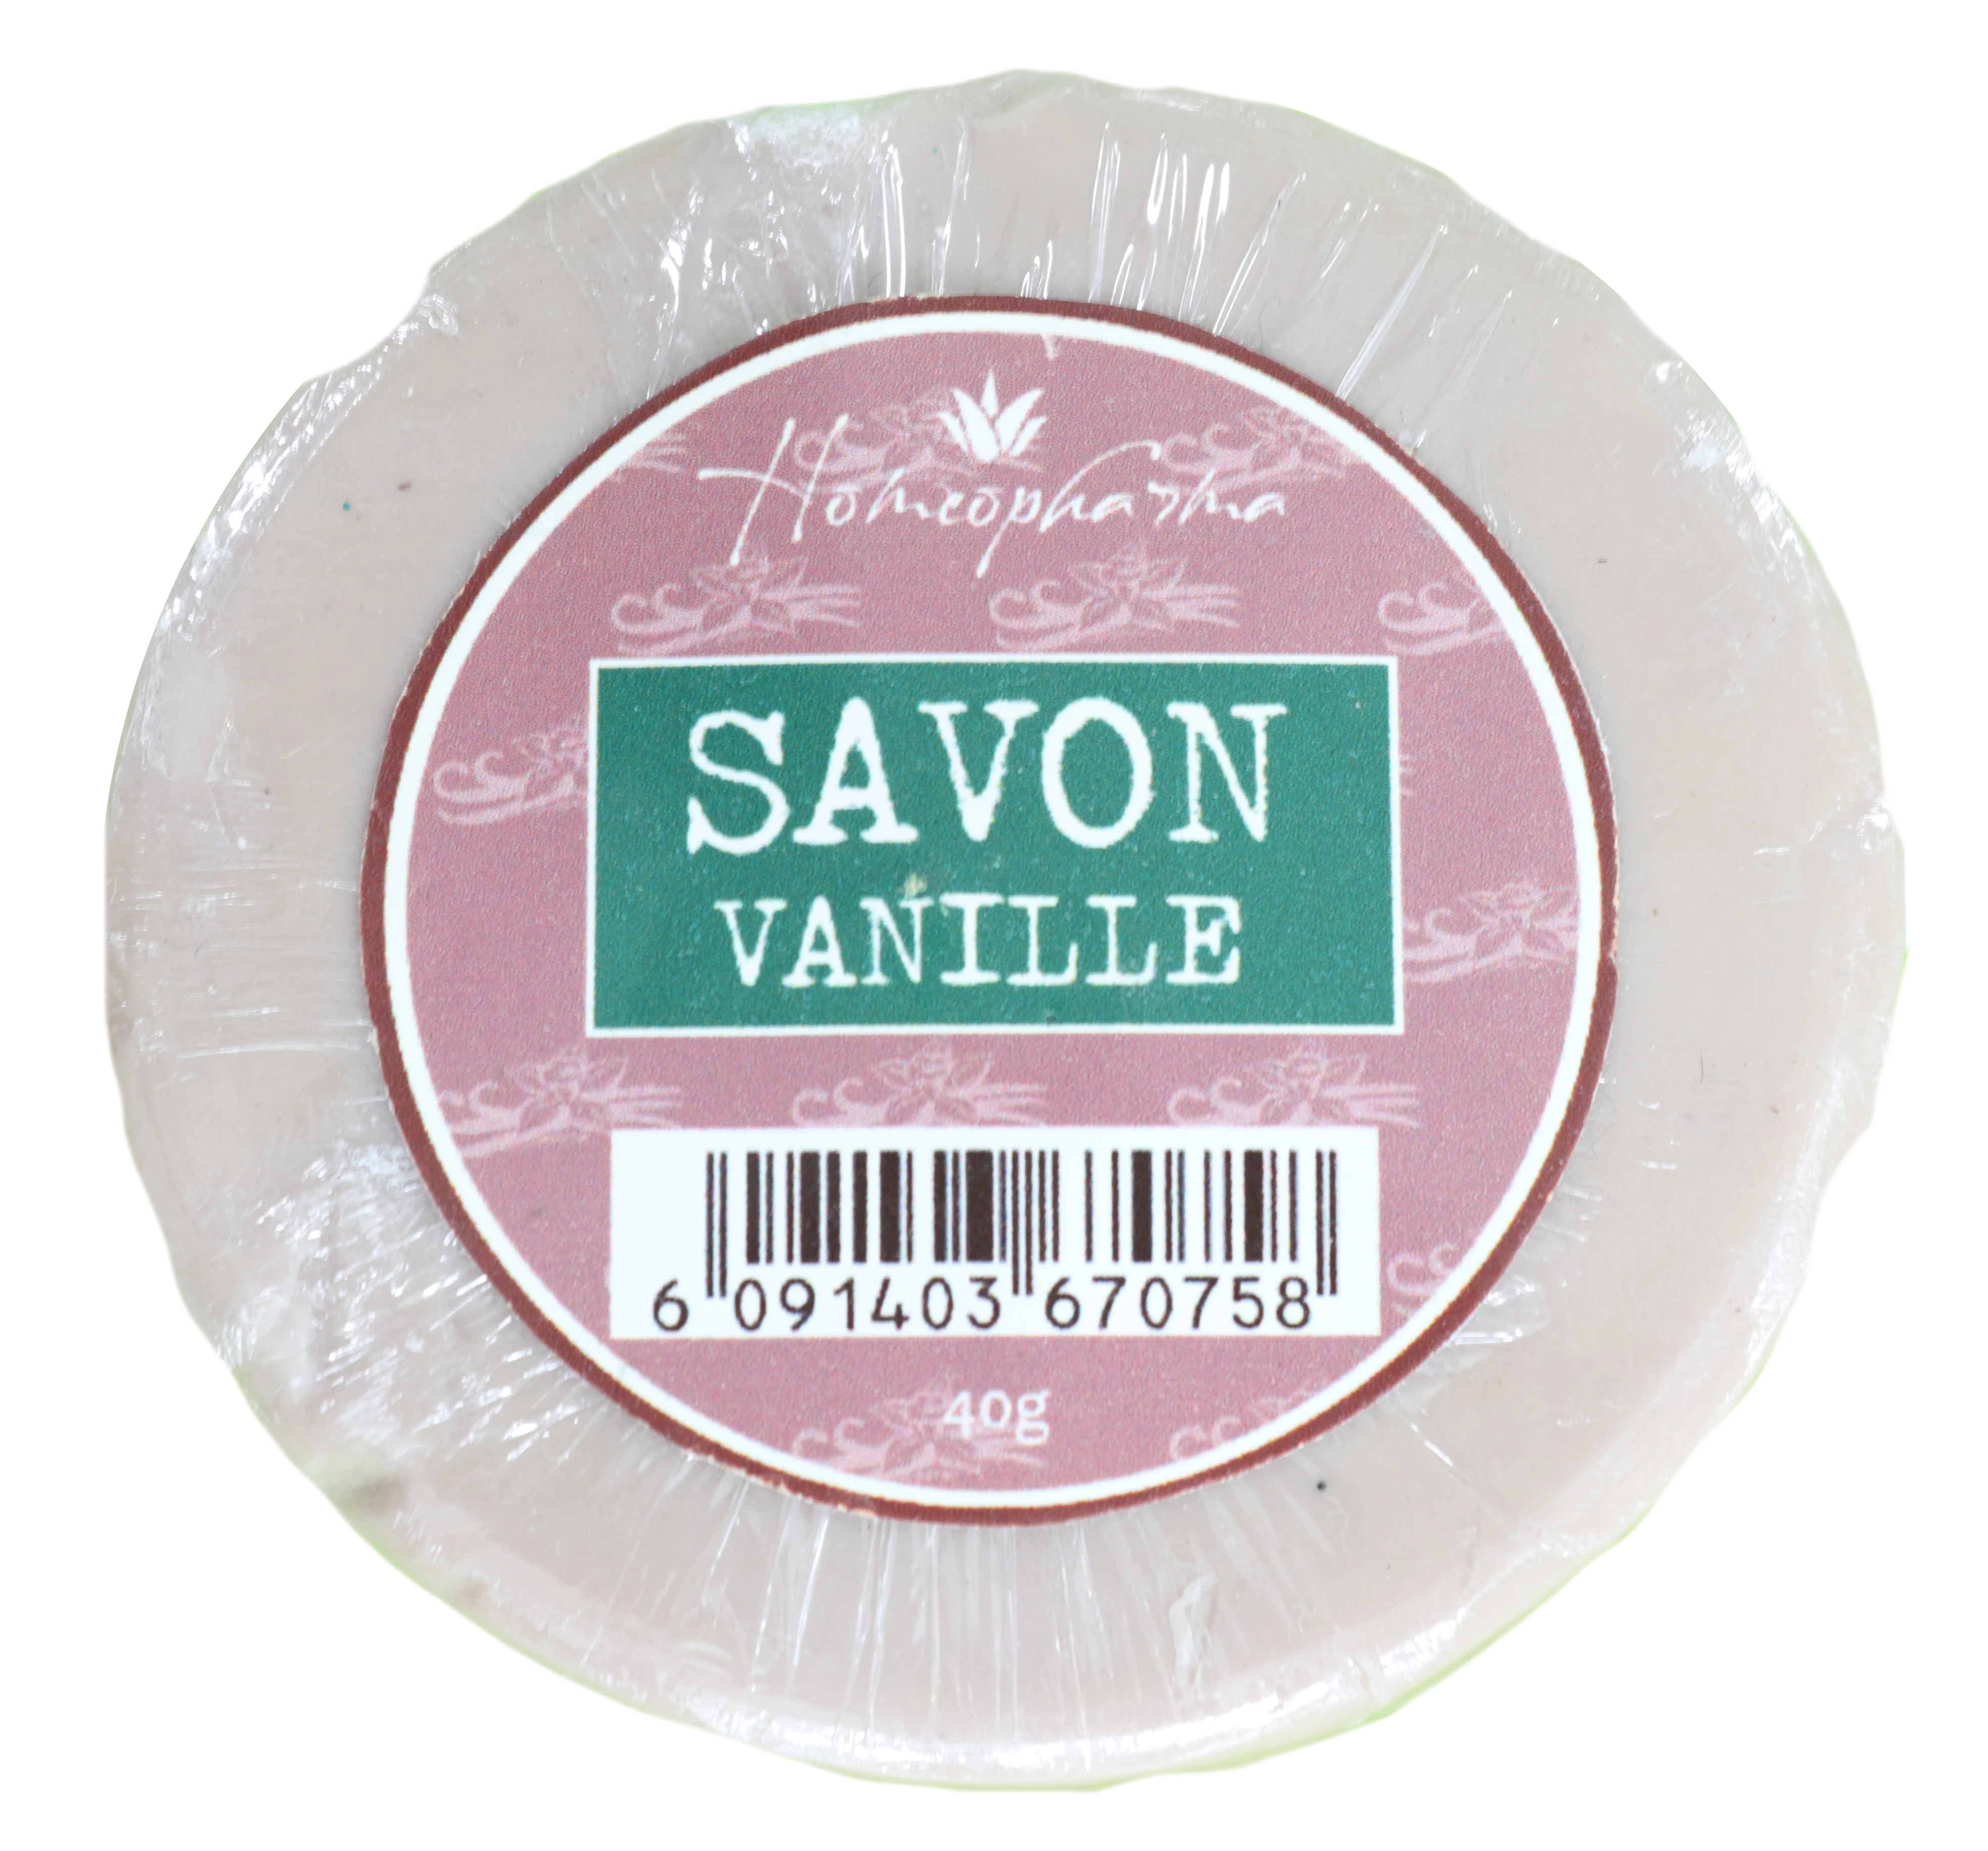 Soap 40g Palet Vanille - HOMEOPHARMA